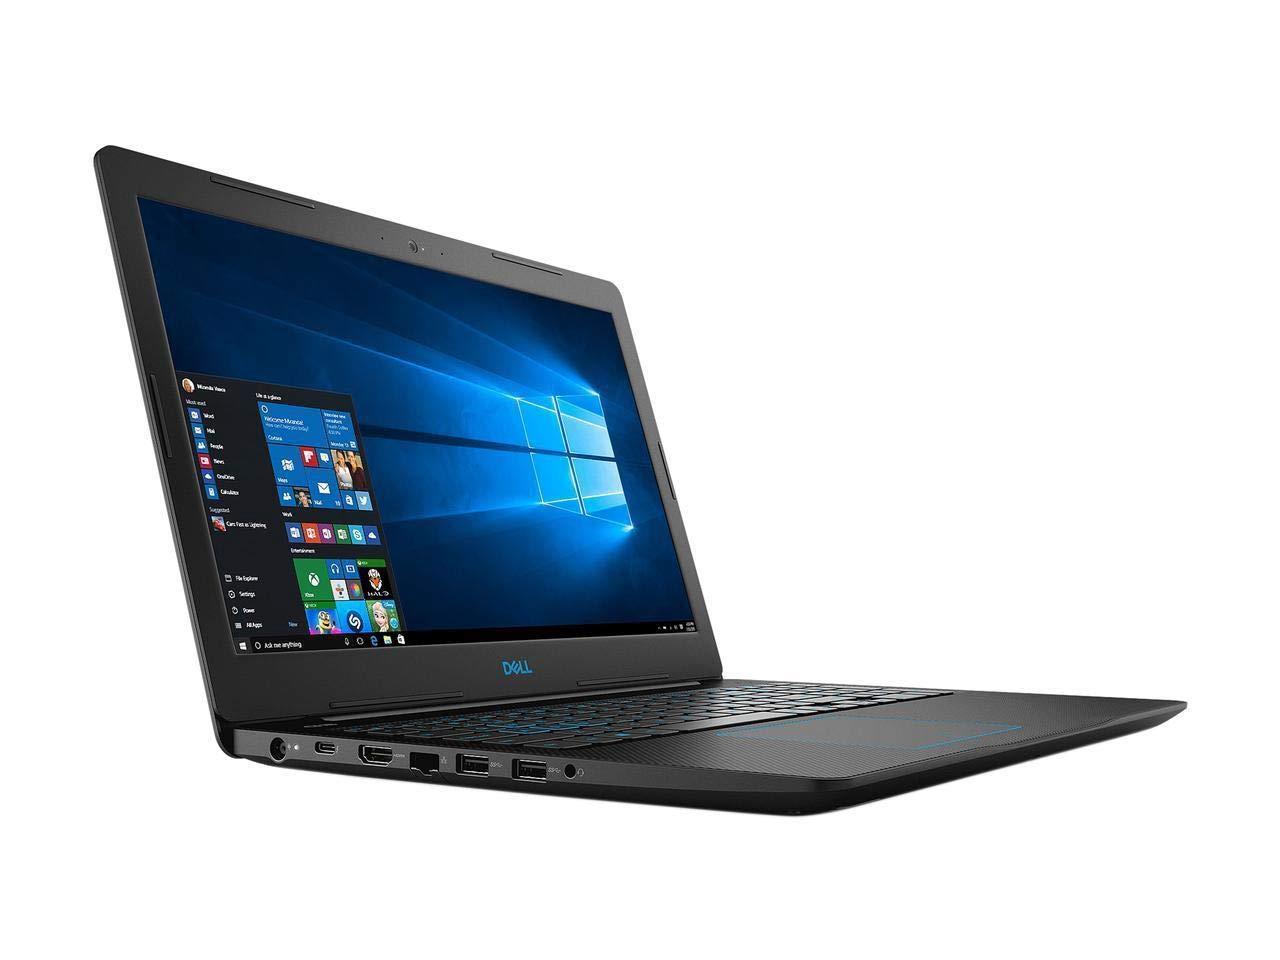 Newest Dell 15.6" FHD IPS High-Performance Gaming Laptop | Intel Core i5-8300H Quad-Core|12GB DDR4 RAM |256GB M.2 SSD+1TB HDD |NVIDIA GeForce GTX 1050Ti 4GB |Backlit Keyboard | MaxxAudio|Windows 10